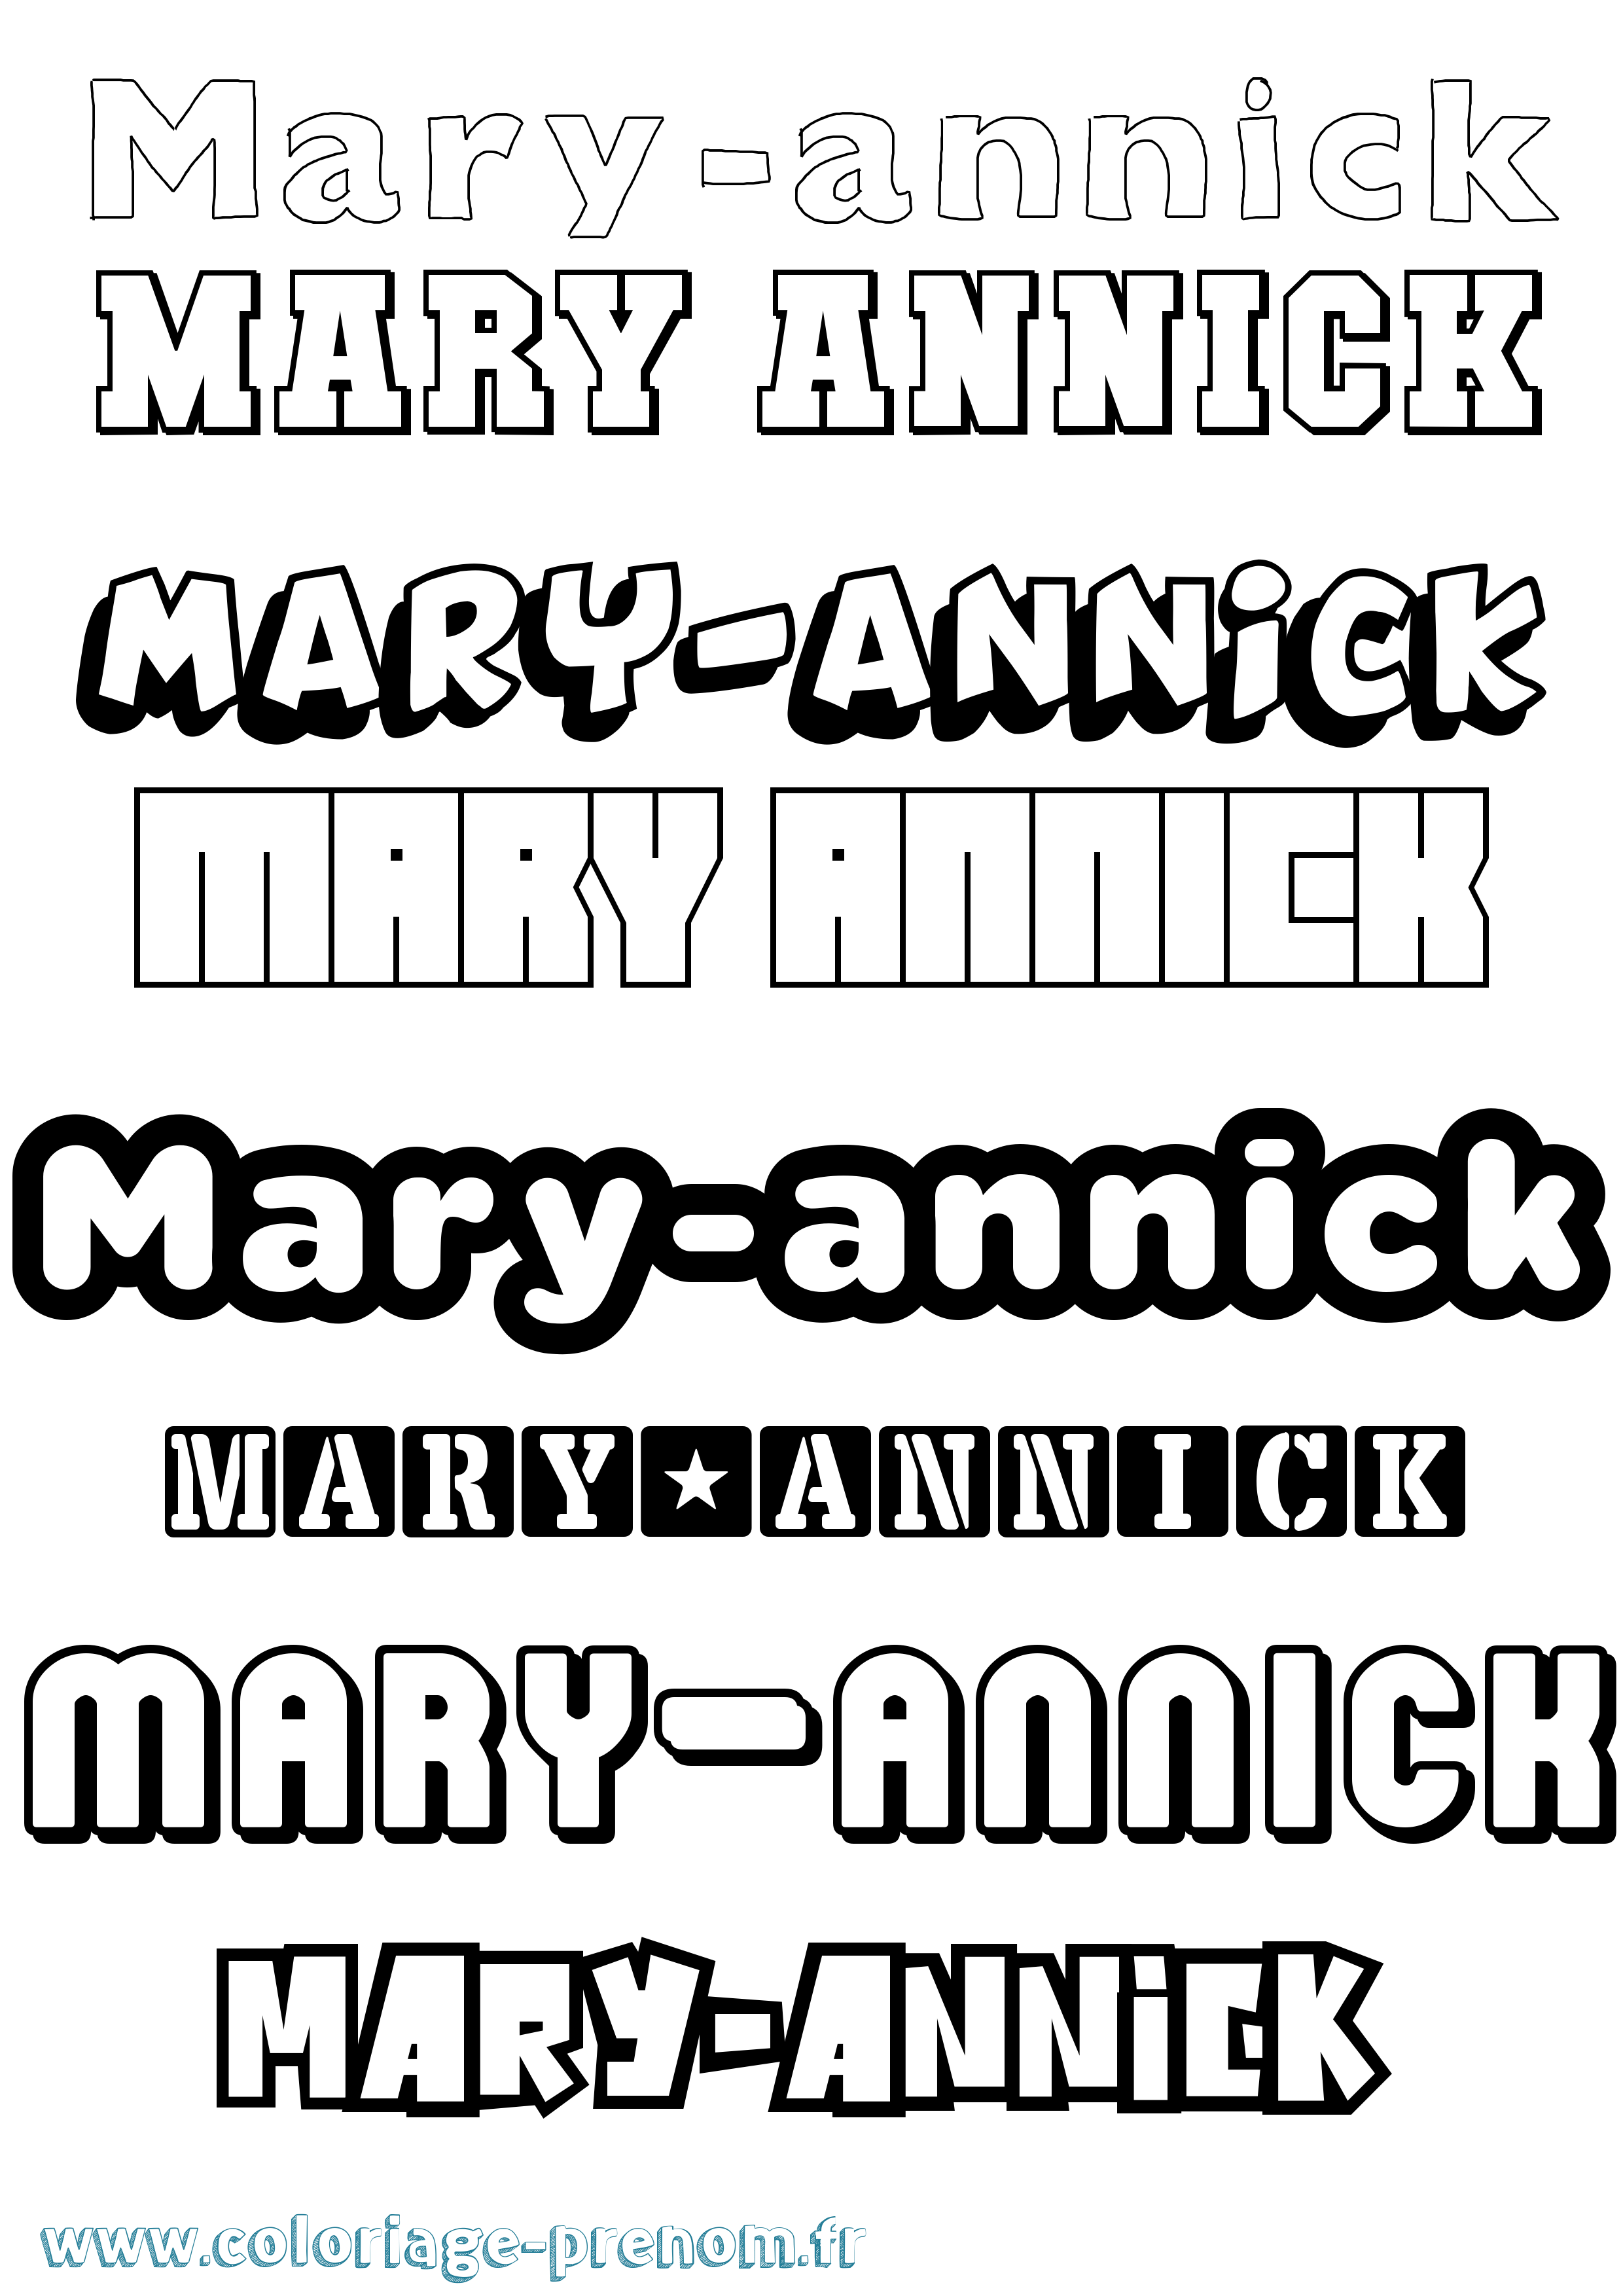 Coloriage prénom Mary-Annick Simple